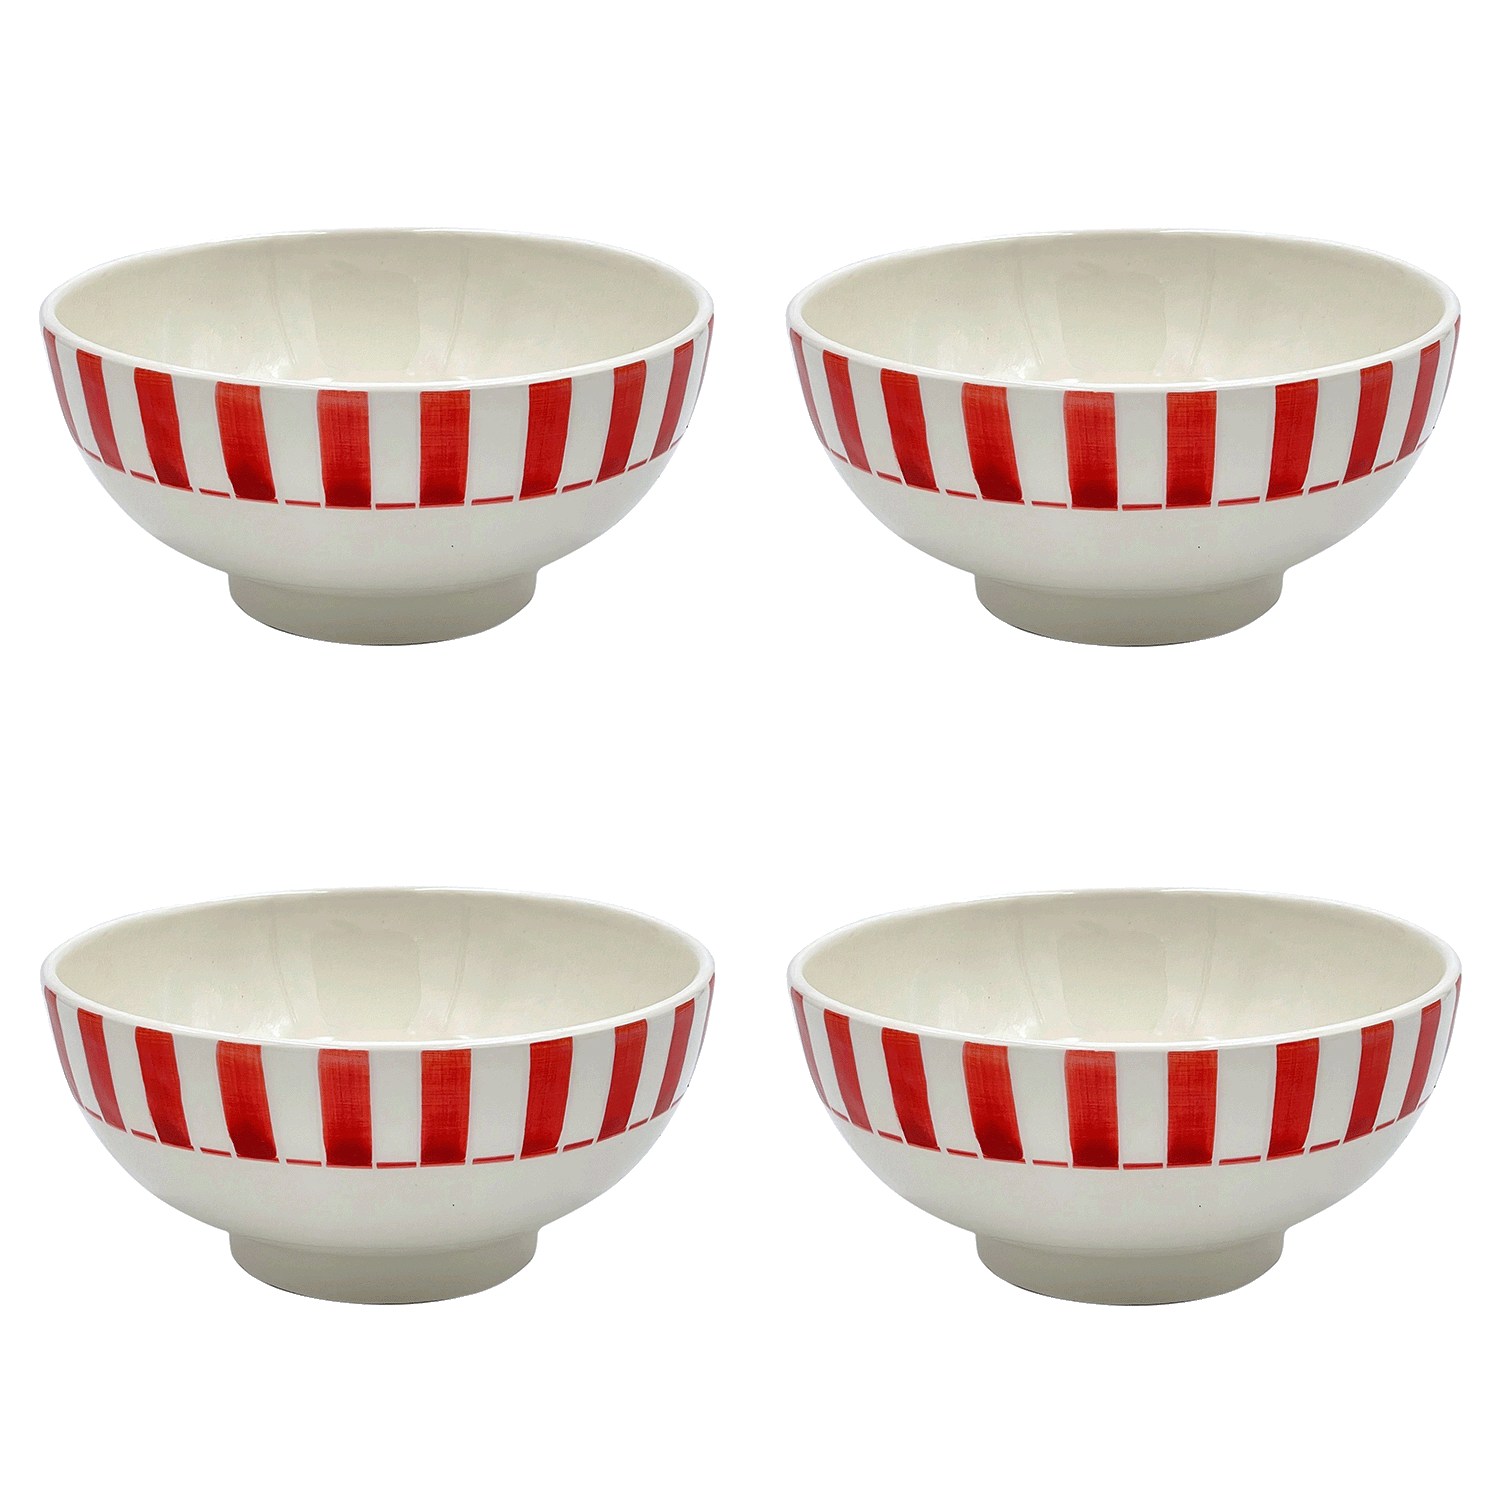 Medium Red Stripes Bowls (Set of 4)